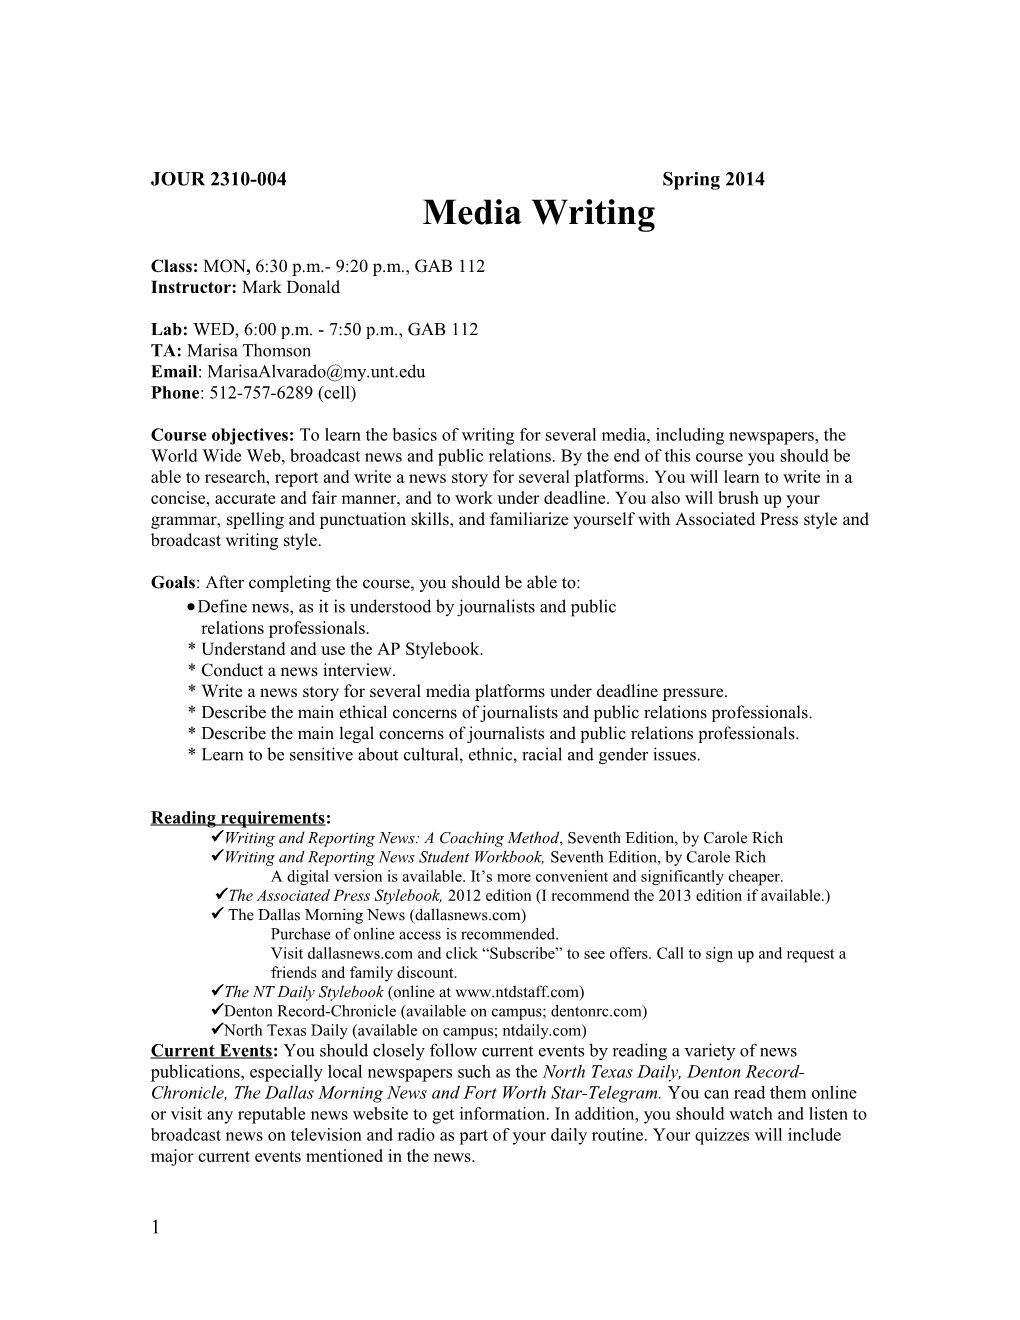 JOUR 2310-004 Spring 2014 Media Writing